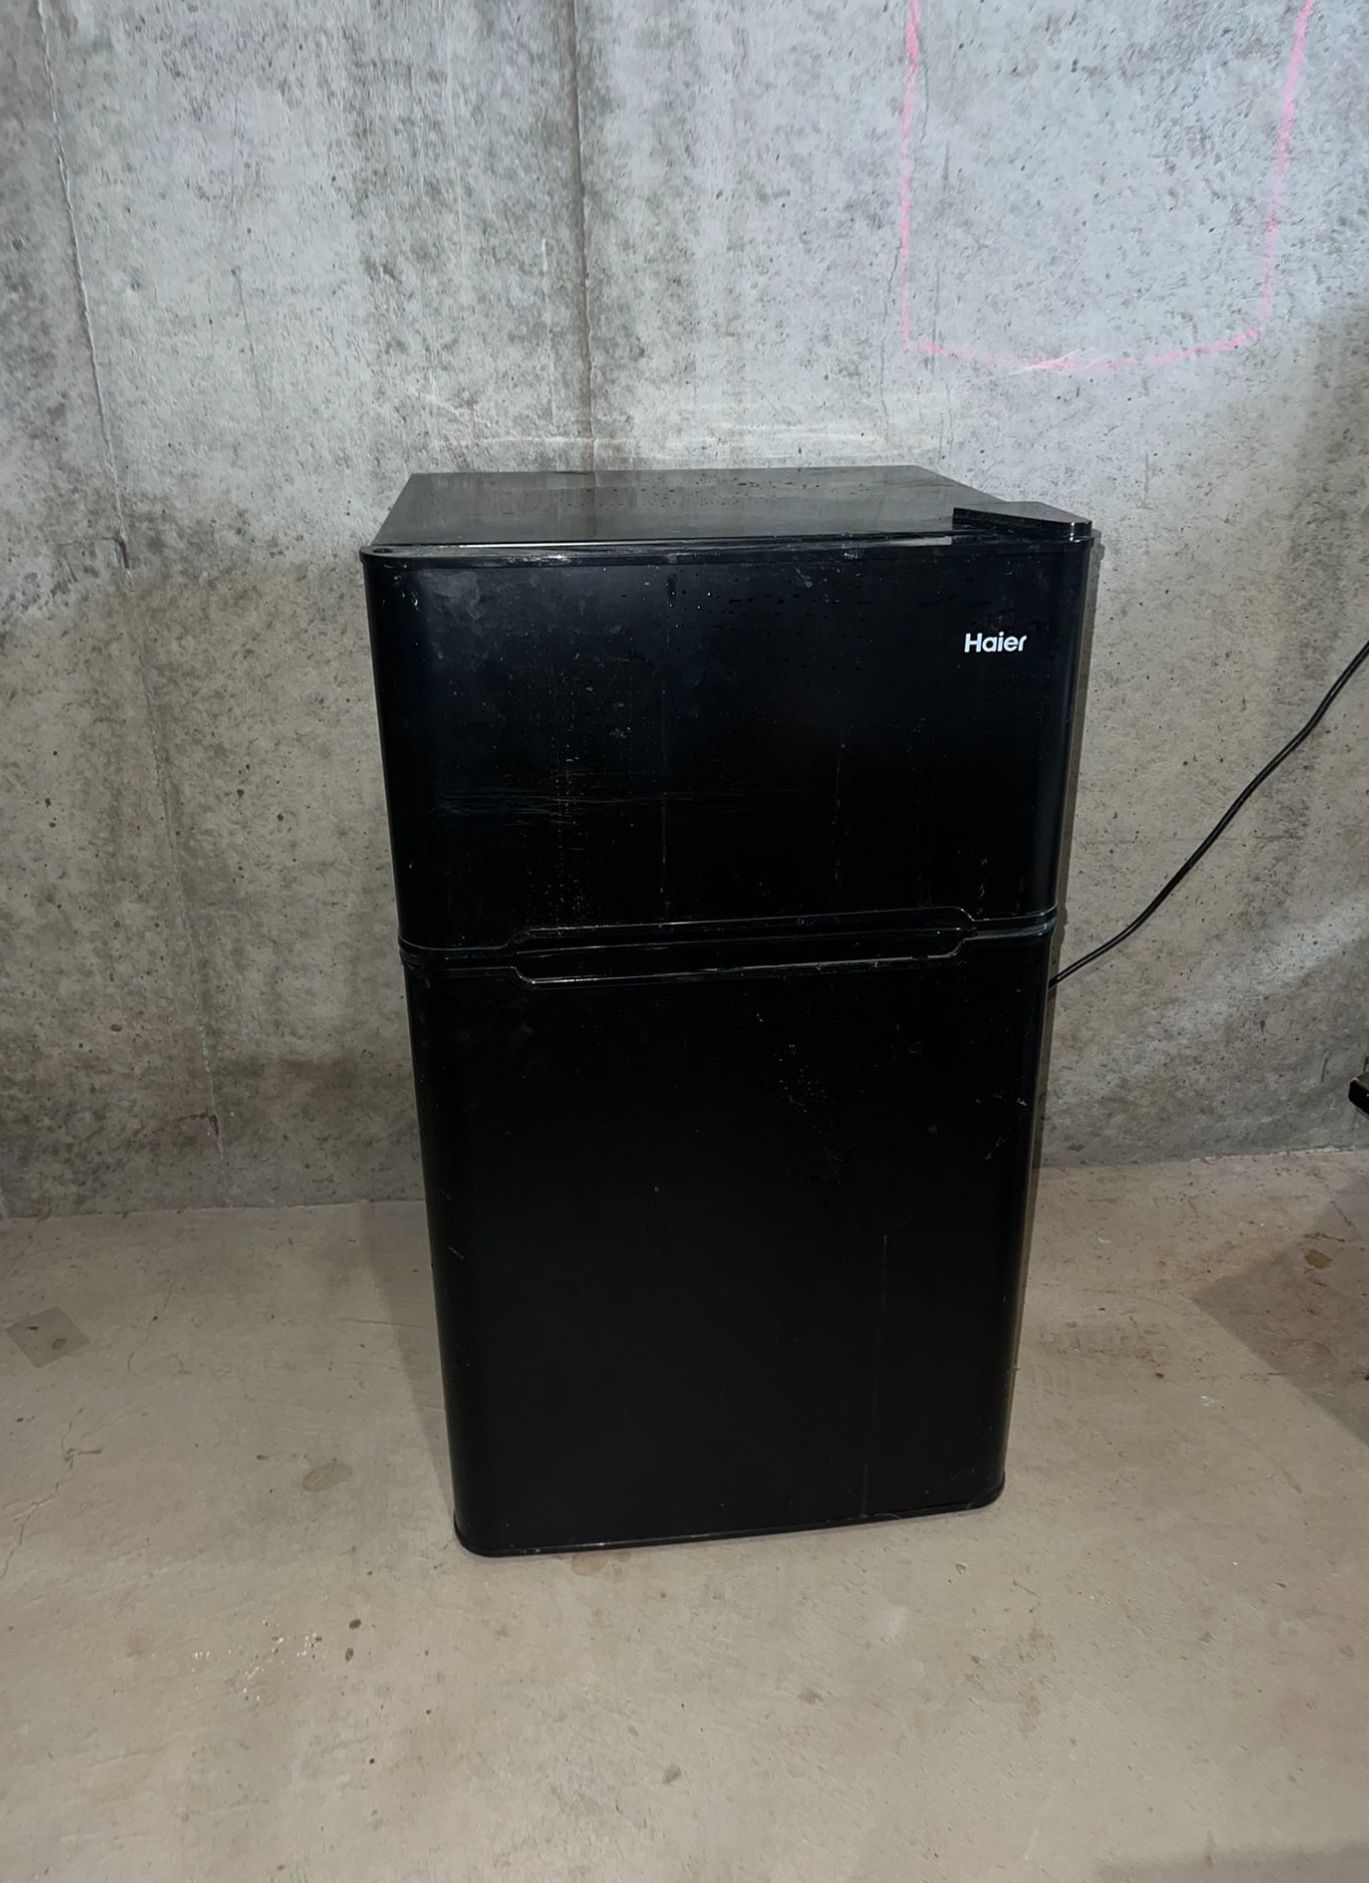 Haier Two Door Refrigerator with Freezer Model Number: HC32TW10SB